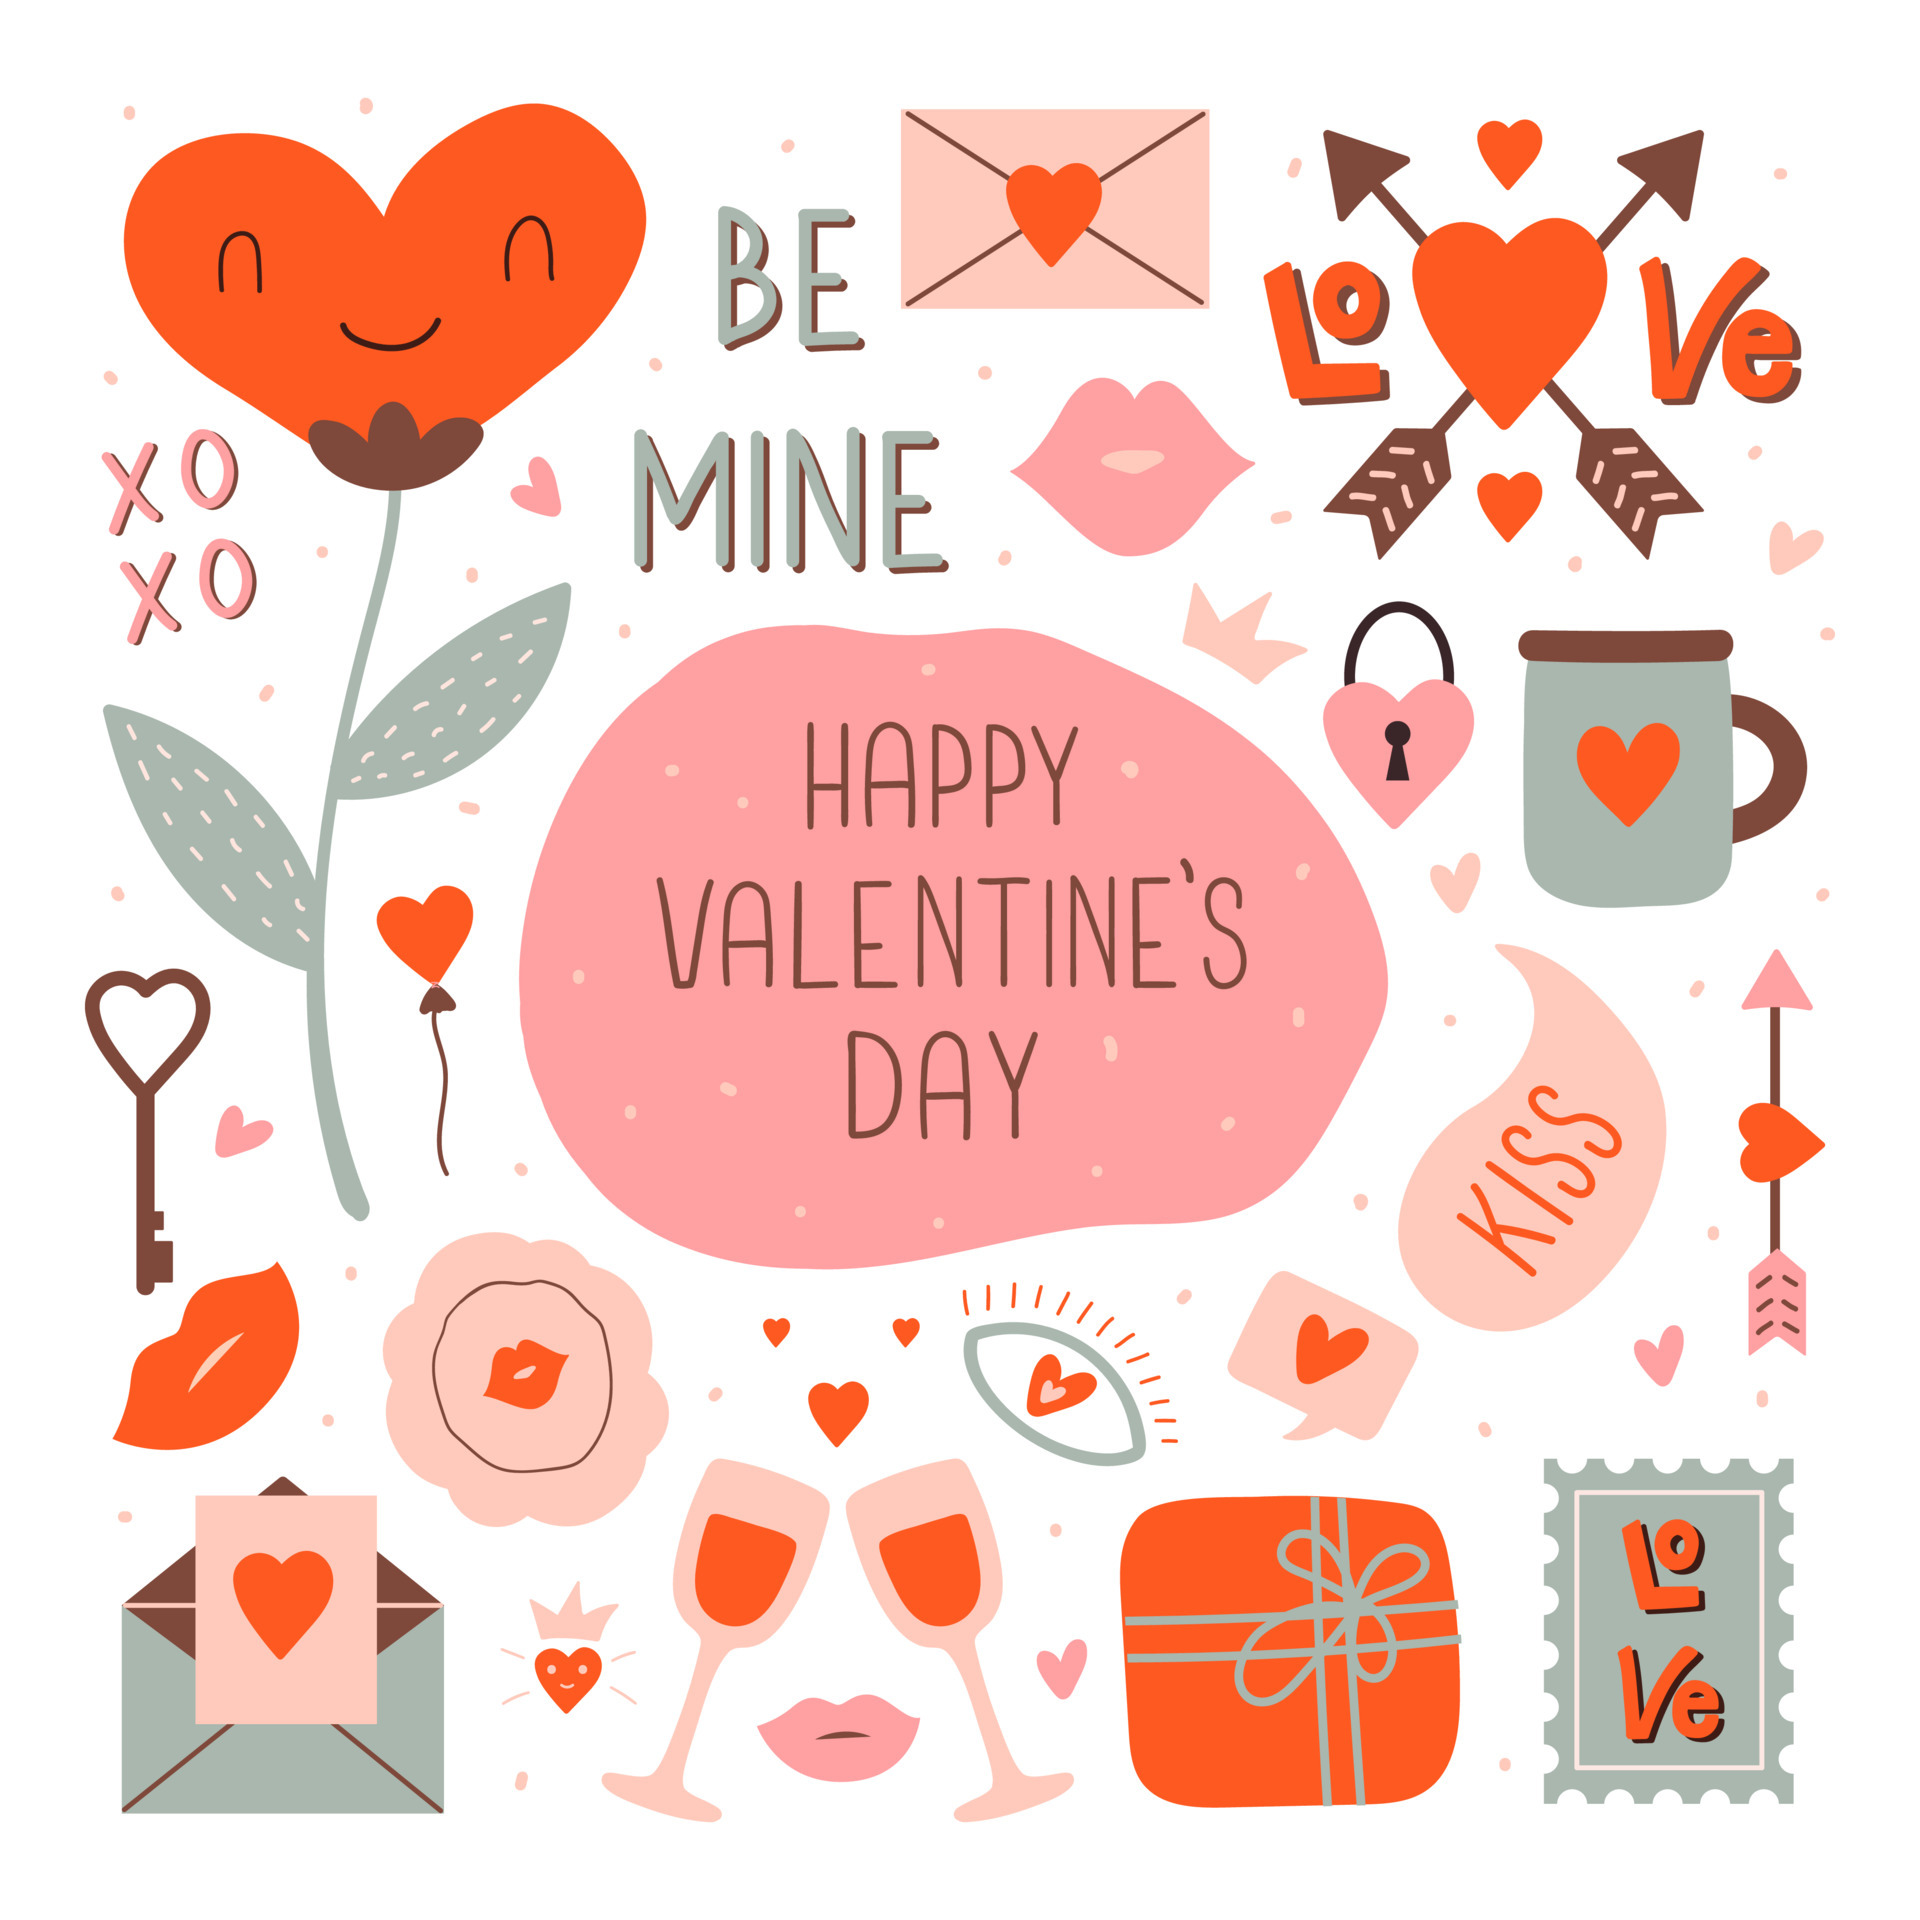 Valentines Day Scrapbook Set Decorative Elements Stock Illustration -  Download Image Now - iStock